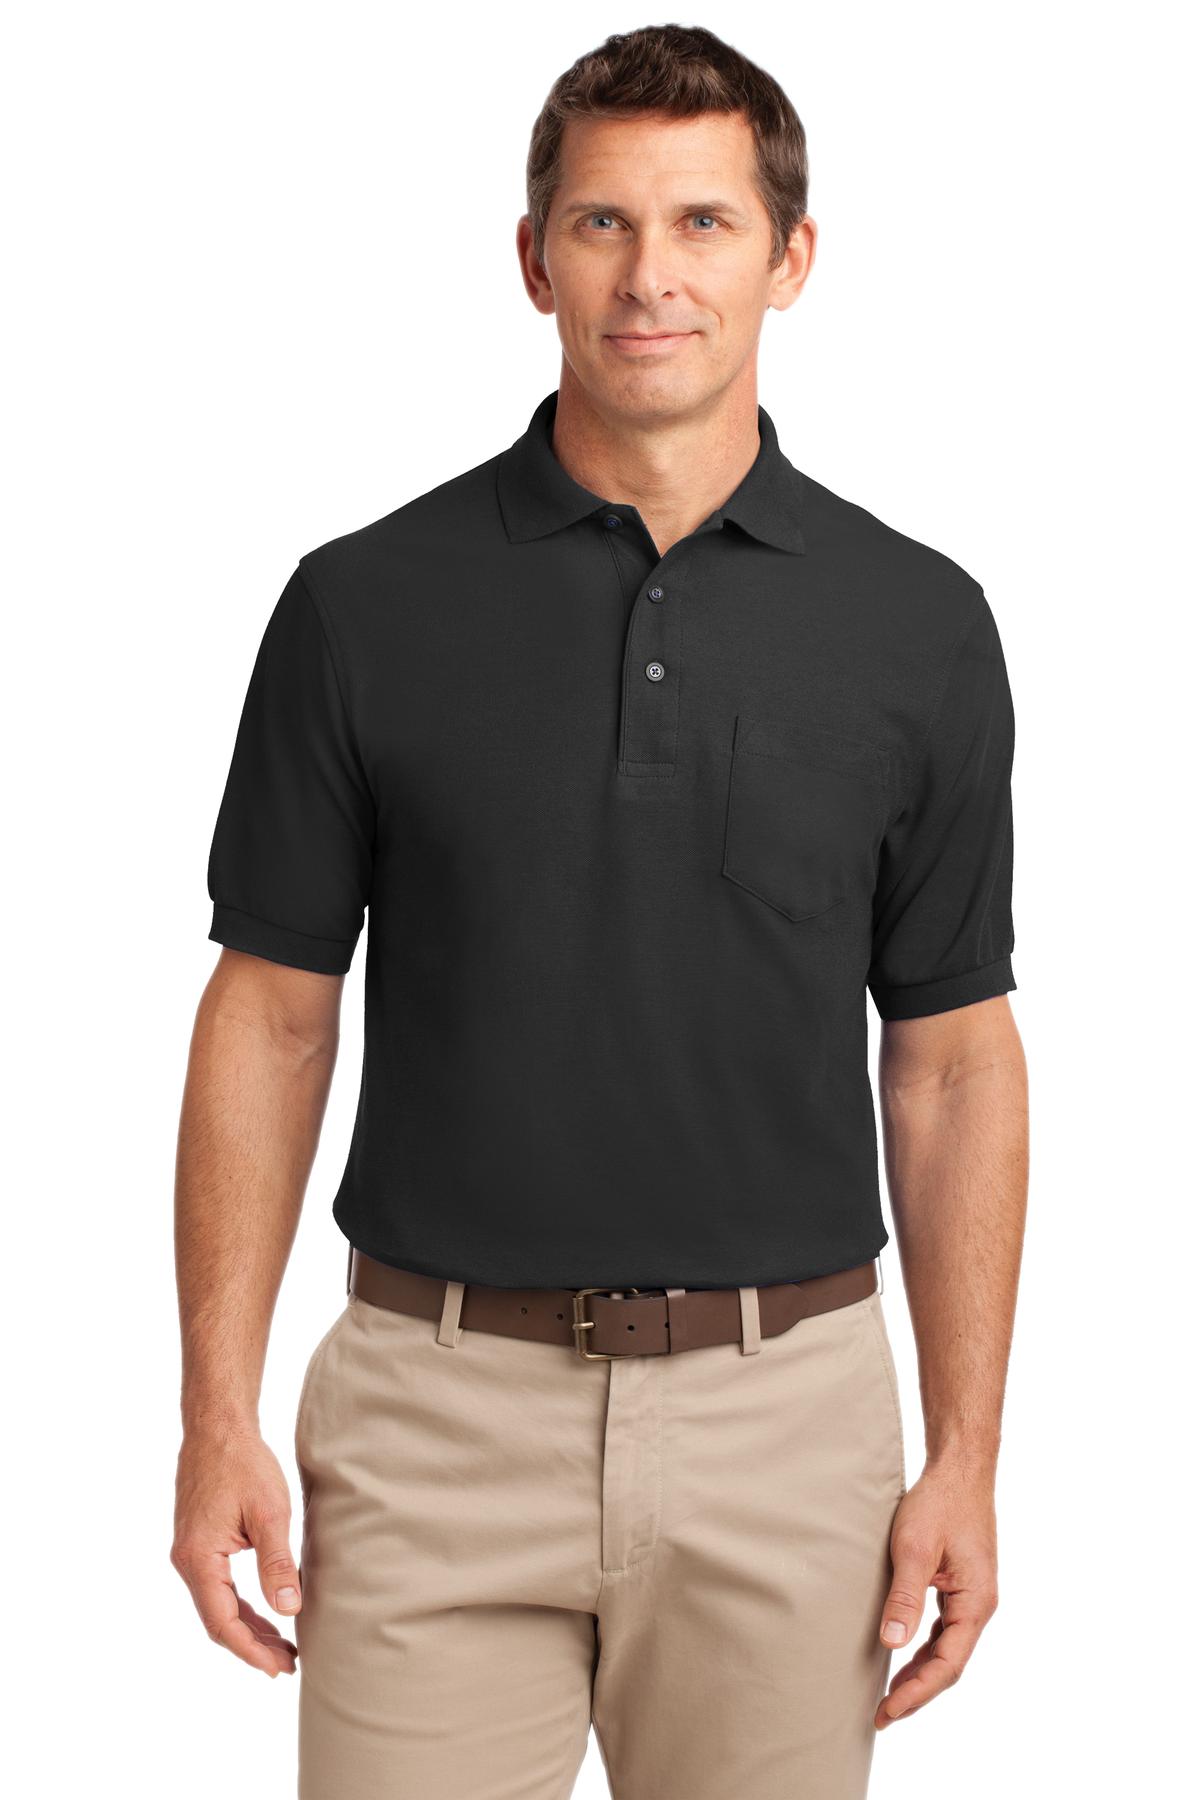 mens black polo shirt with pocket